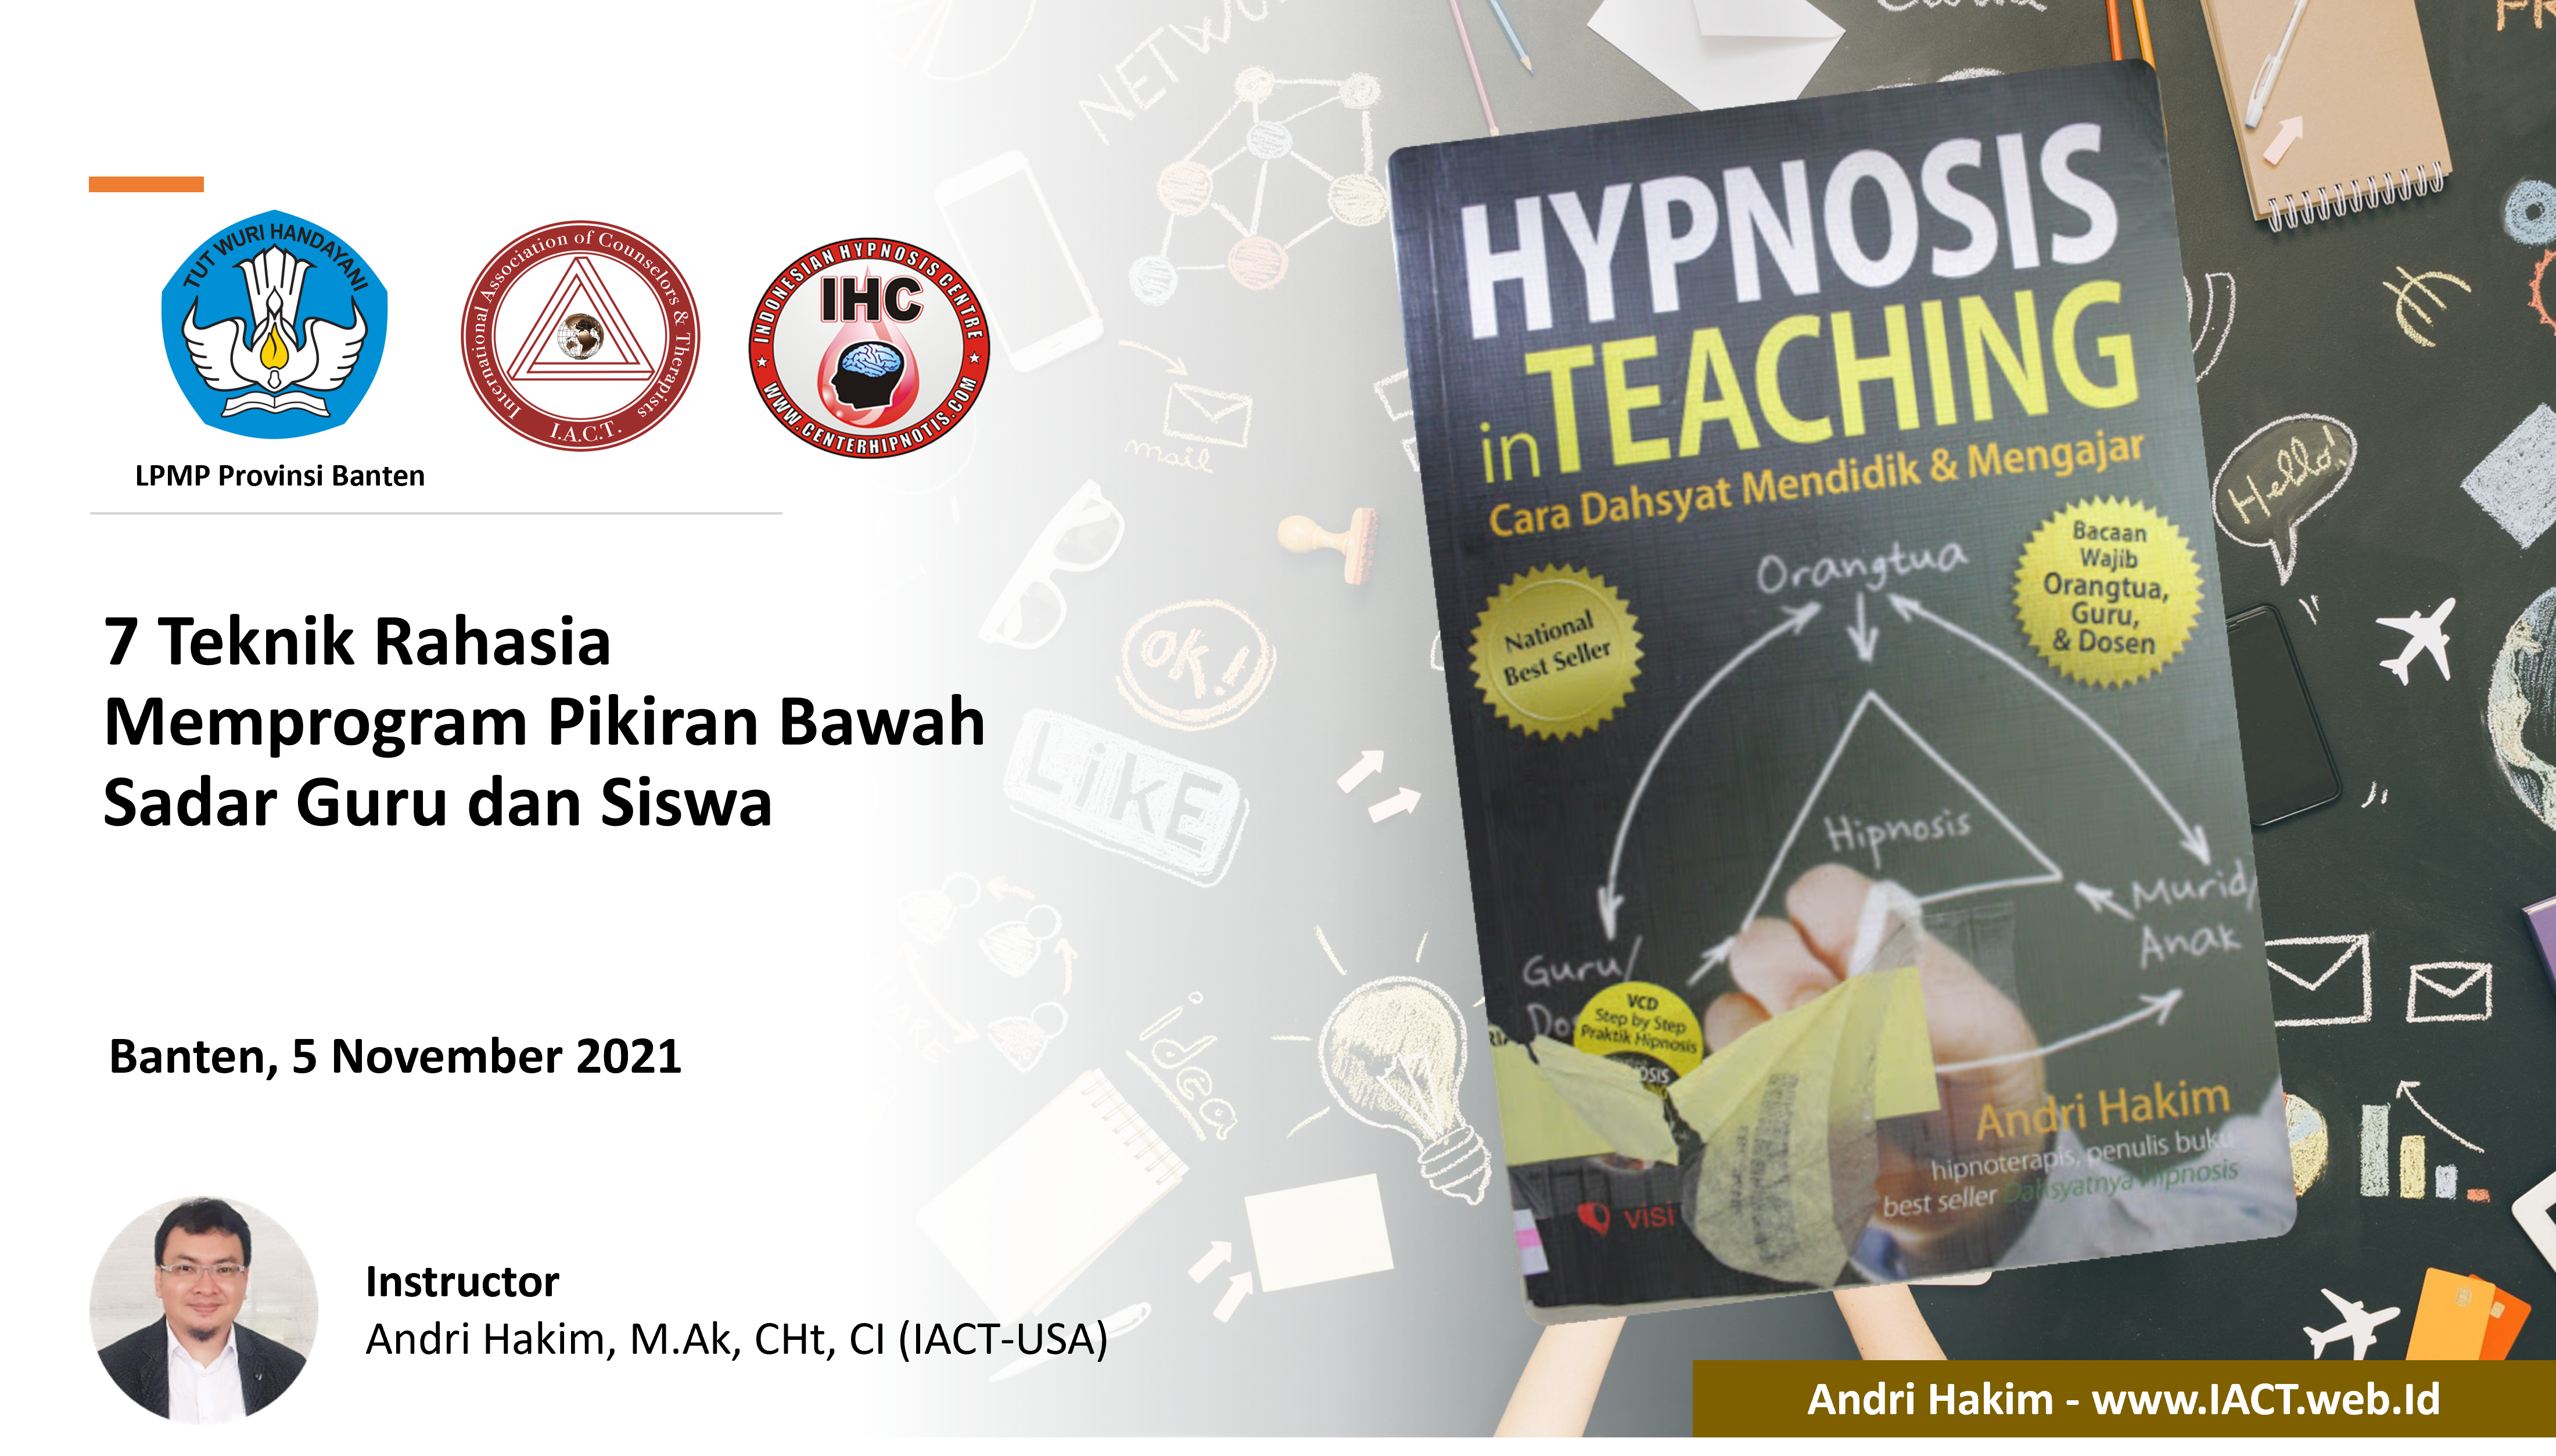 Andri Hakim, Hypnosis in Teaching, Banten, November 2021